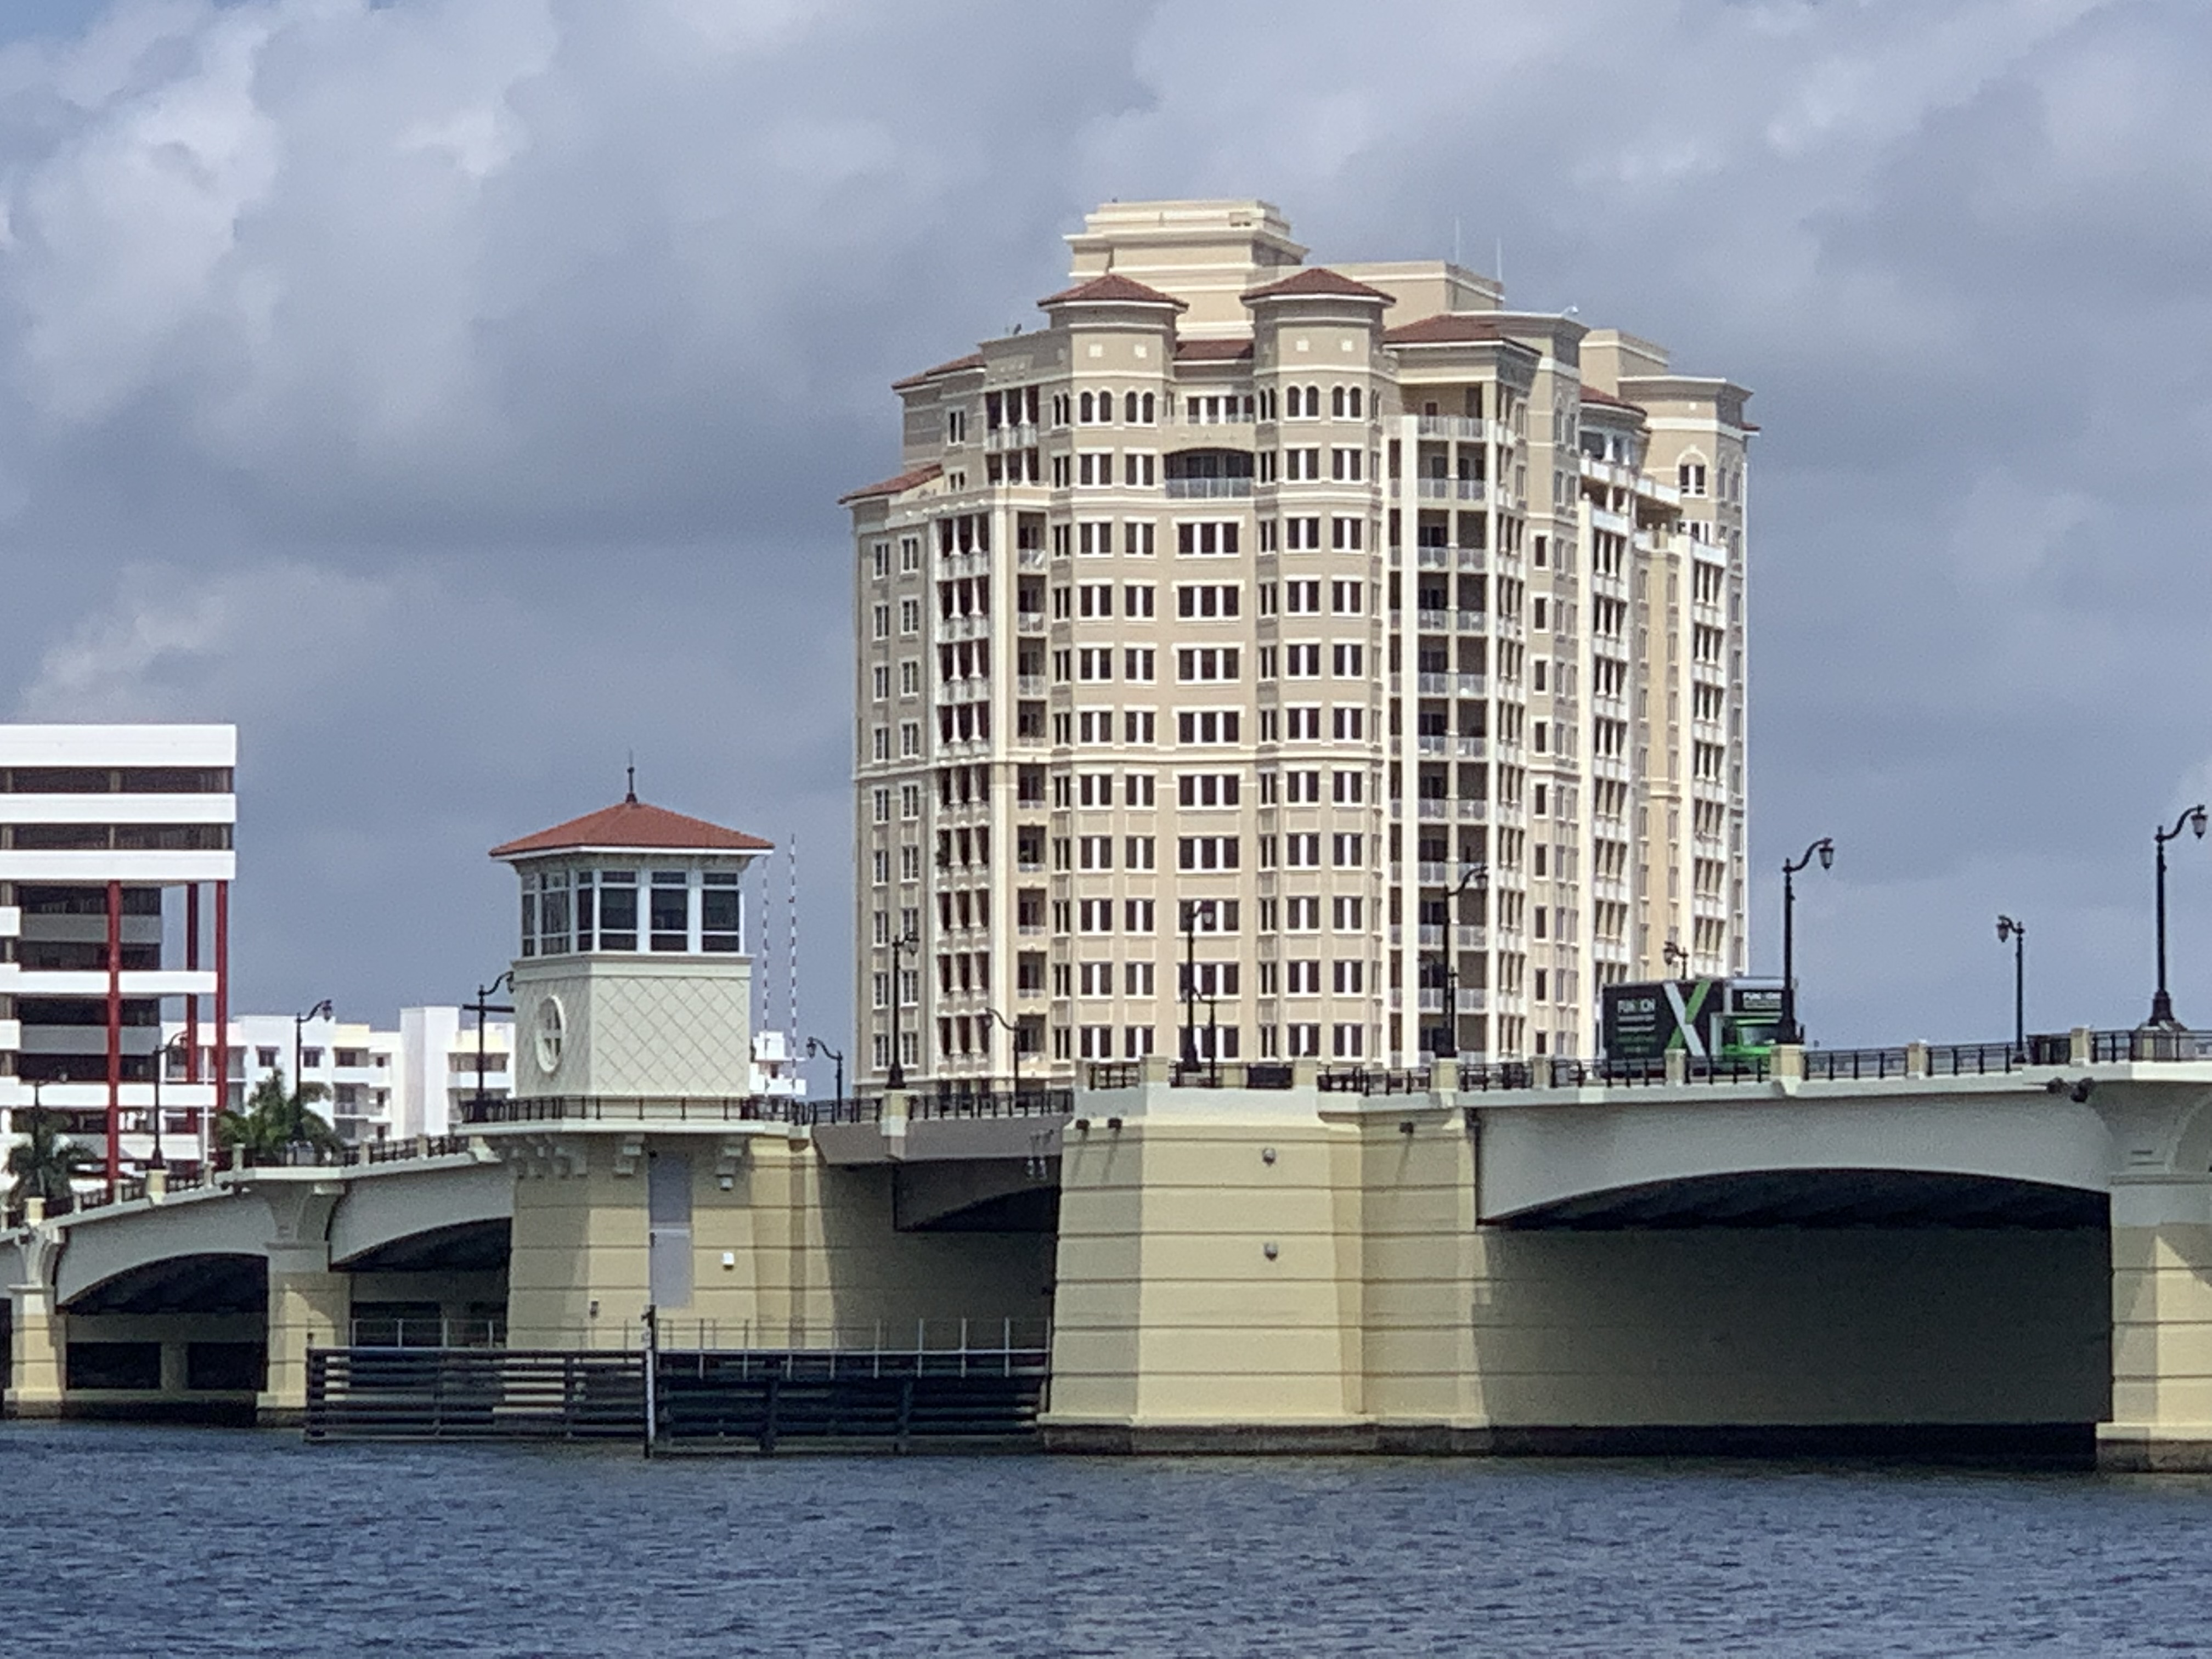 Miami Dade bridge.